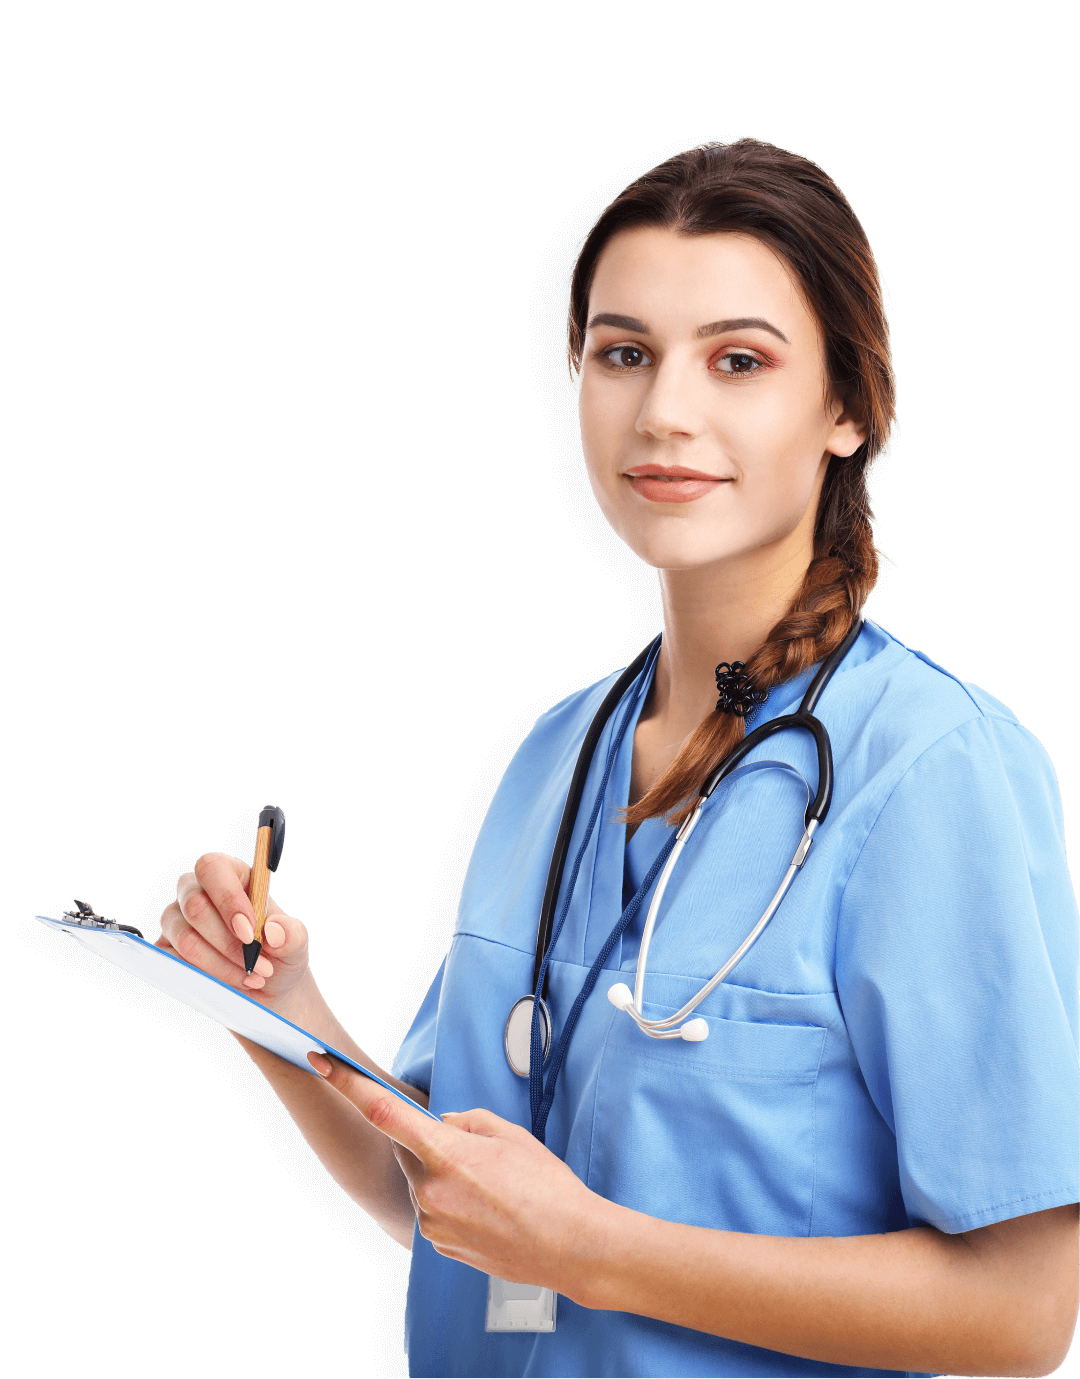 Nurse-Dermatology (DNC) professional